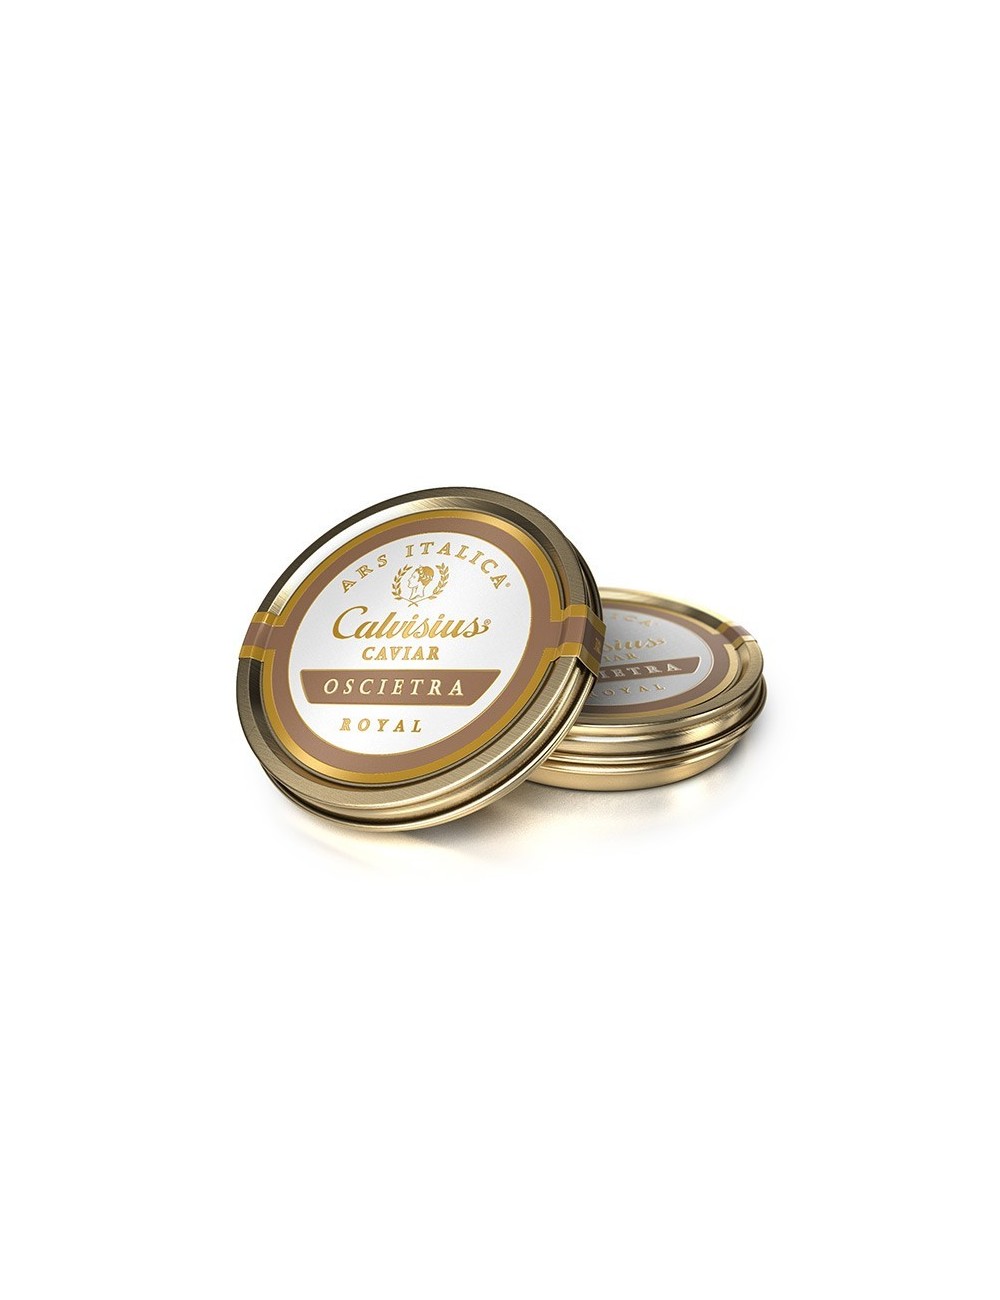 Caviar Calvisius Tradition Prestige 10 gr 